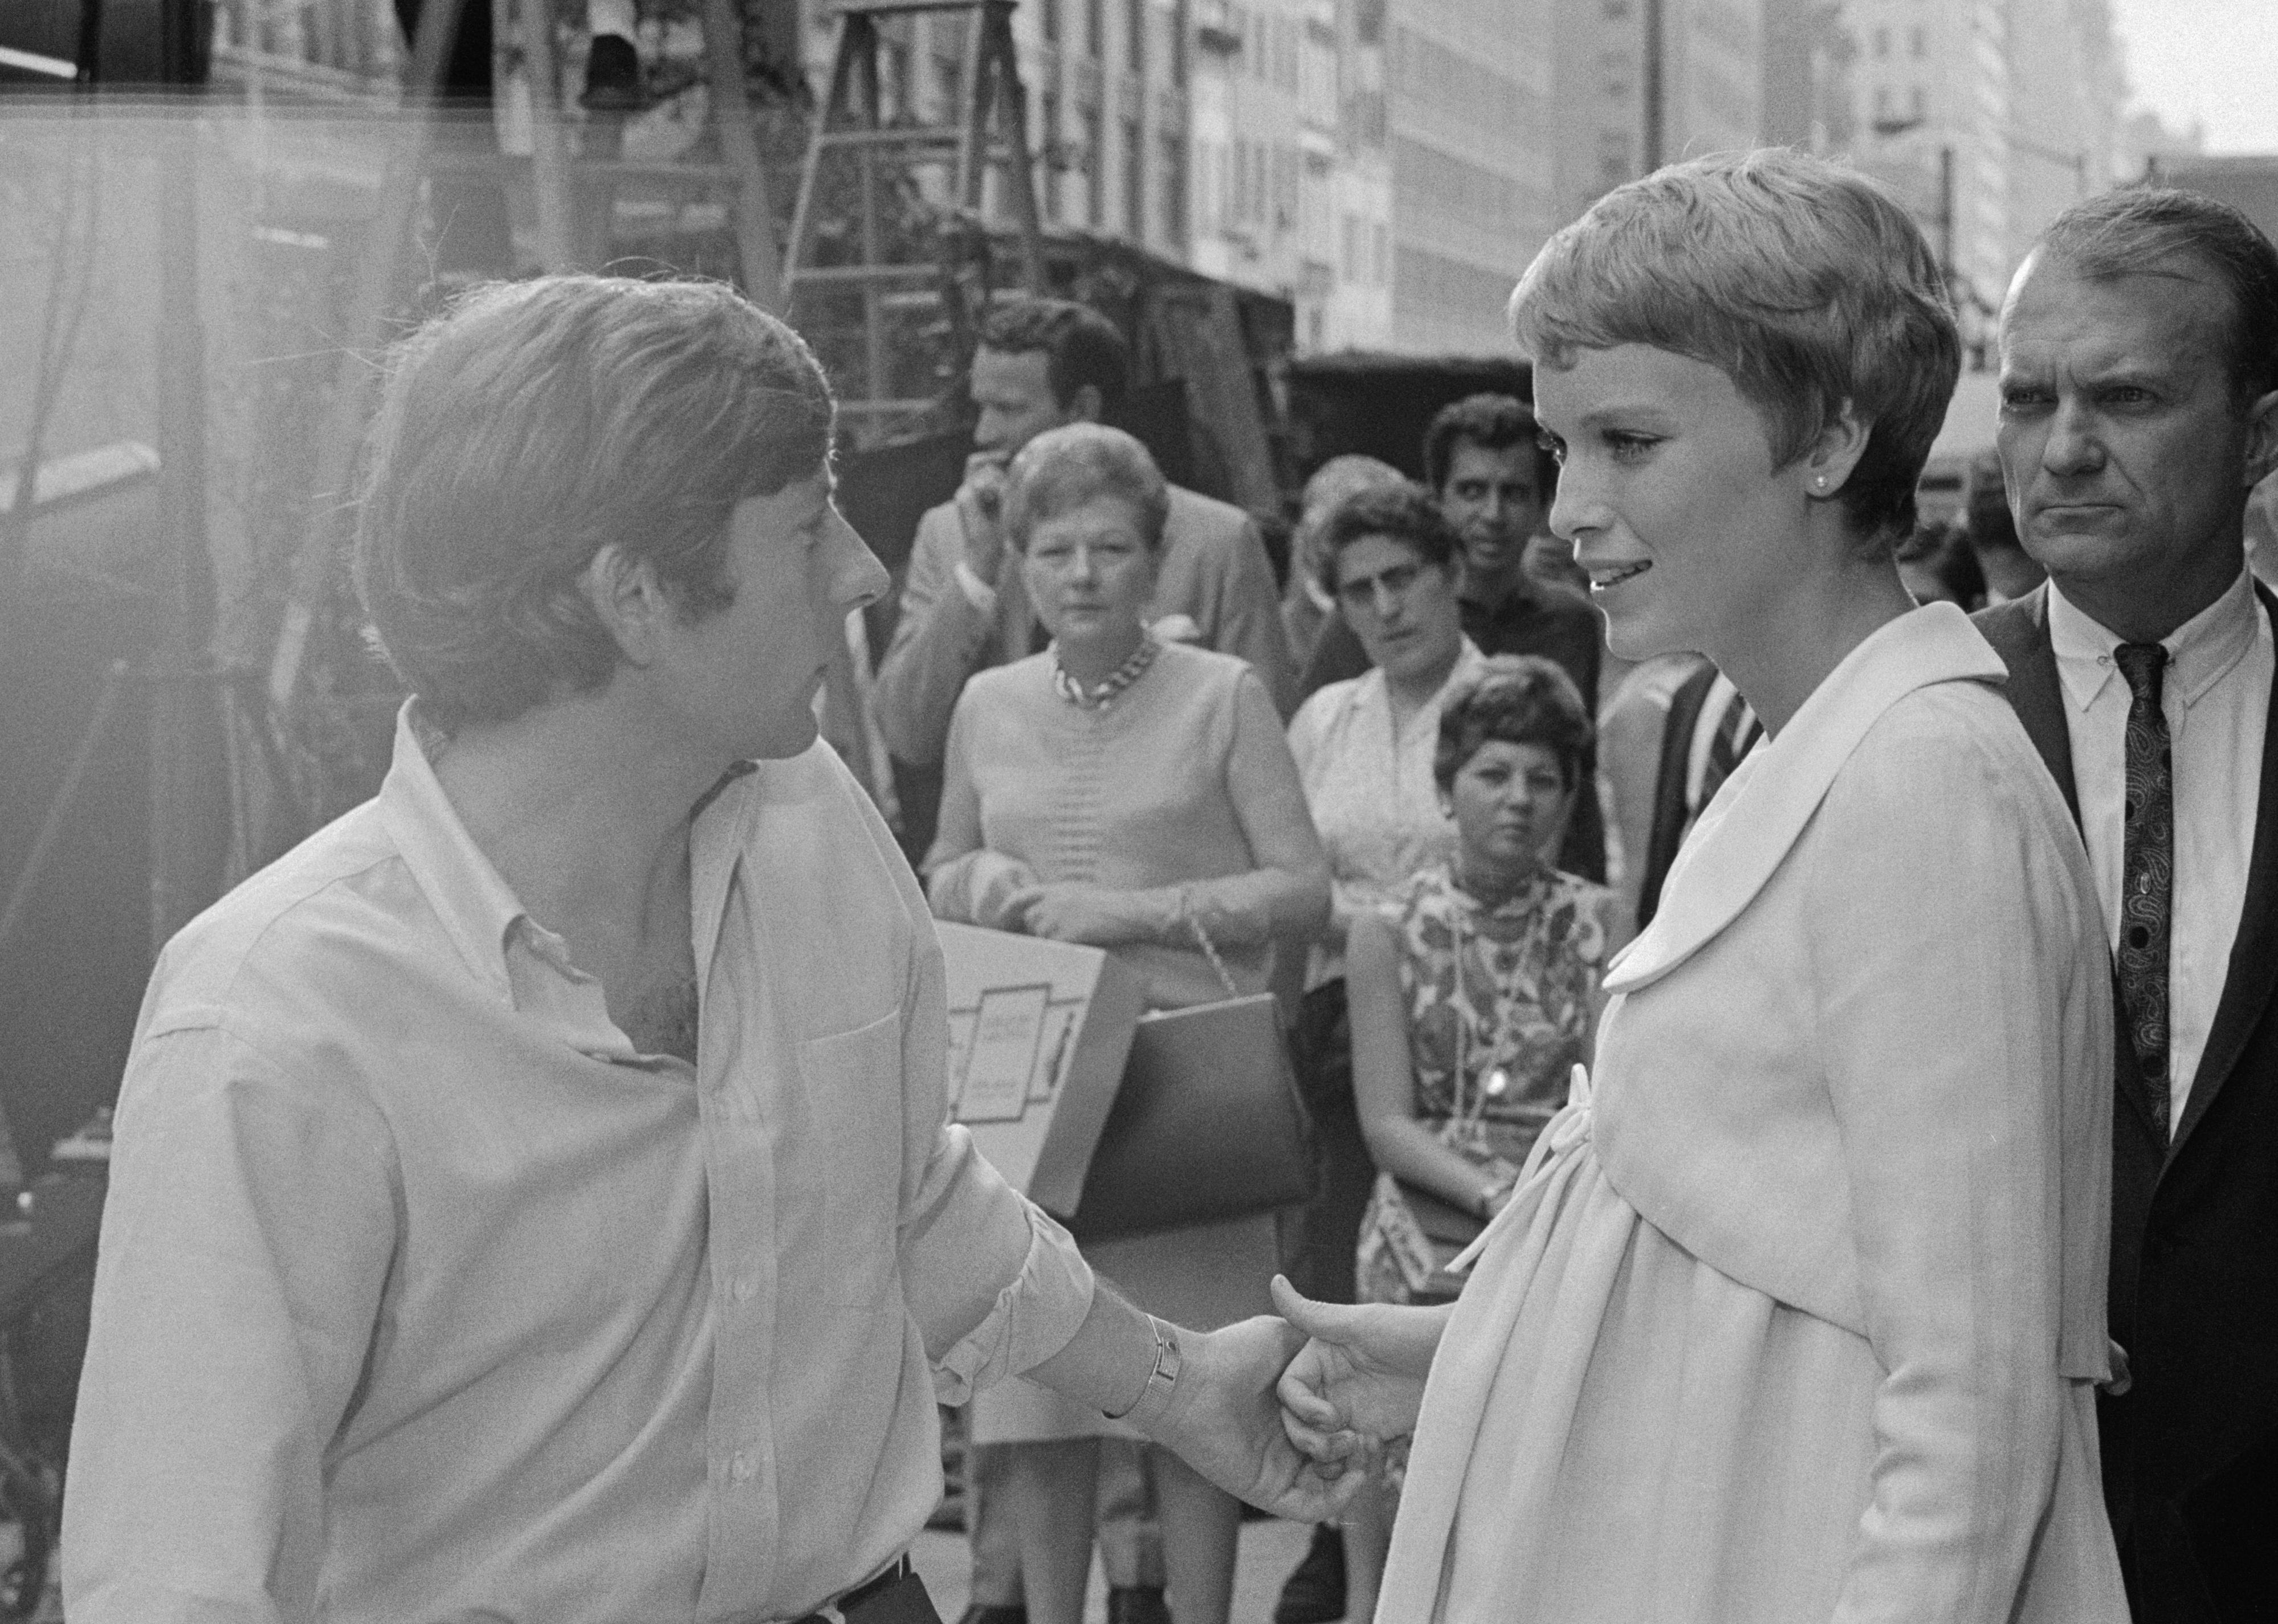  Director Roman Polanski outlines a scene for Mia Farrow, while a crowd watches.